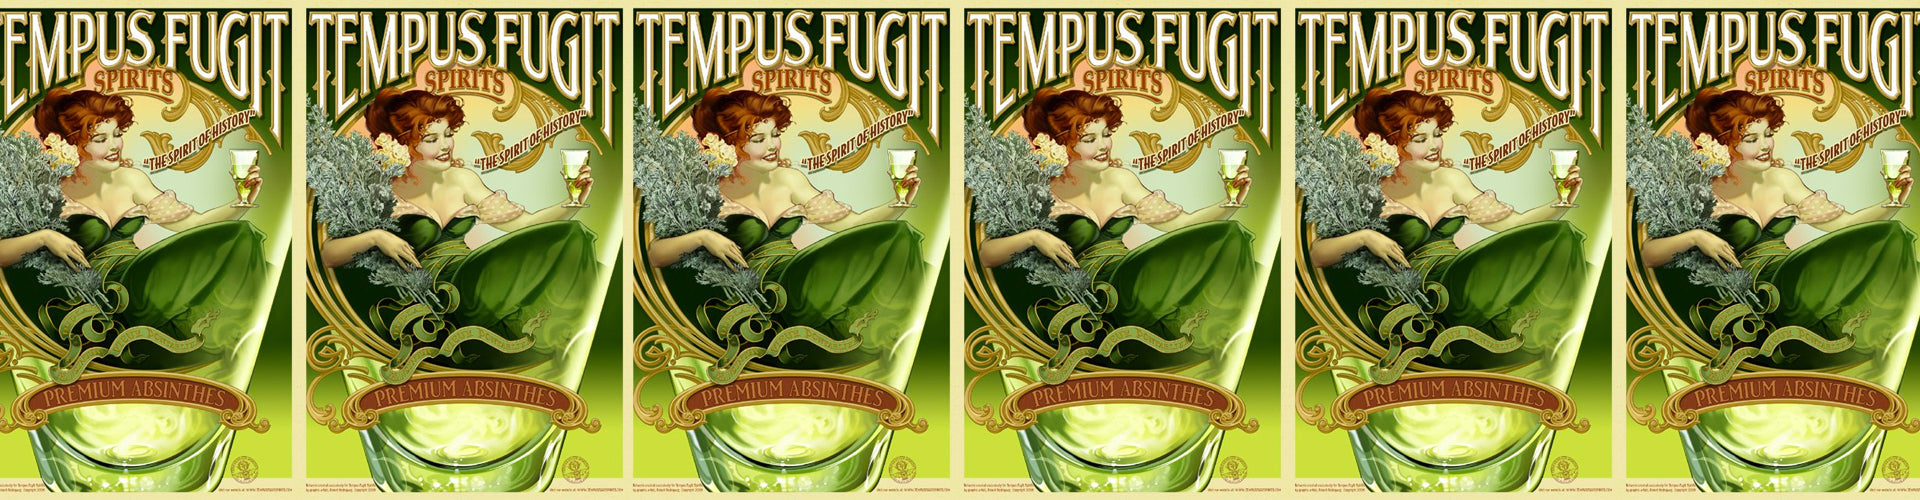 Tempus Fugit Spirits Banner